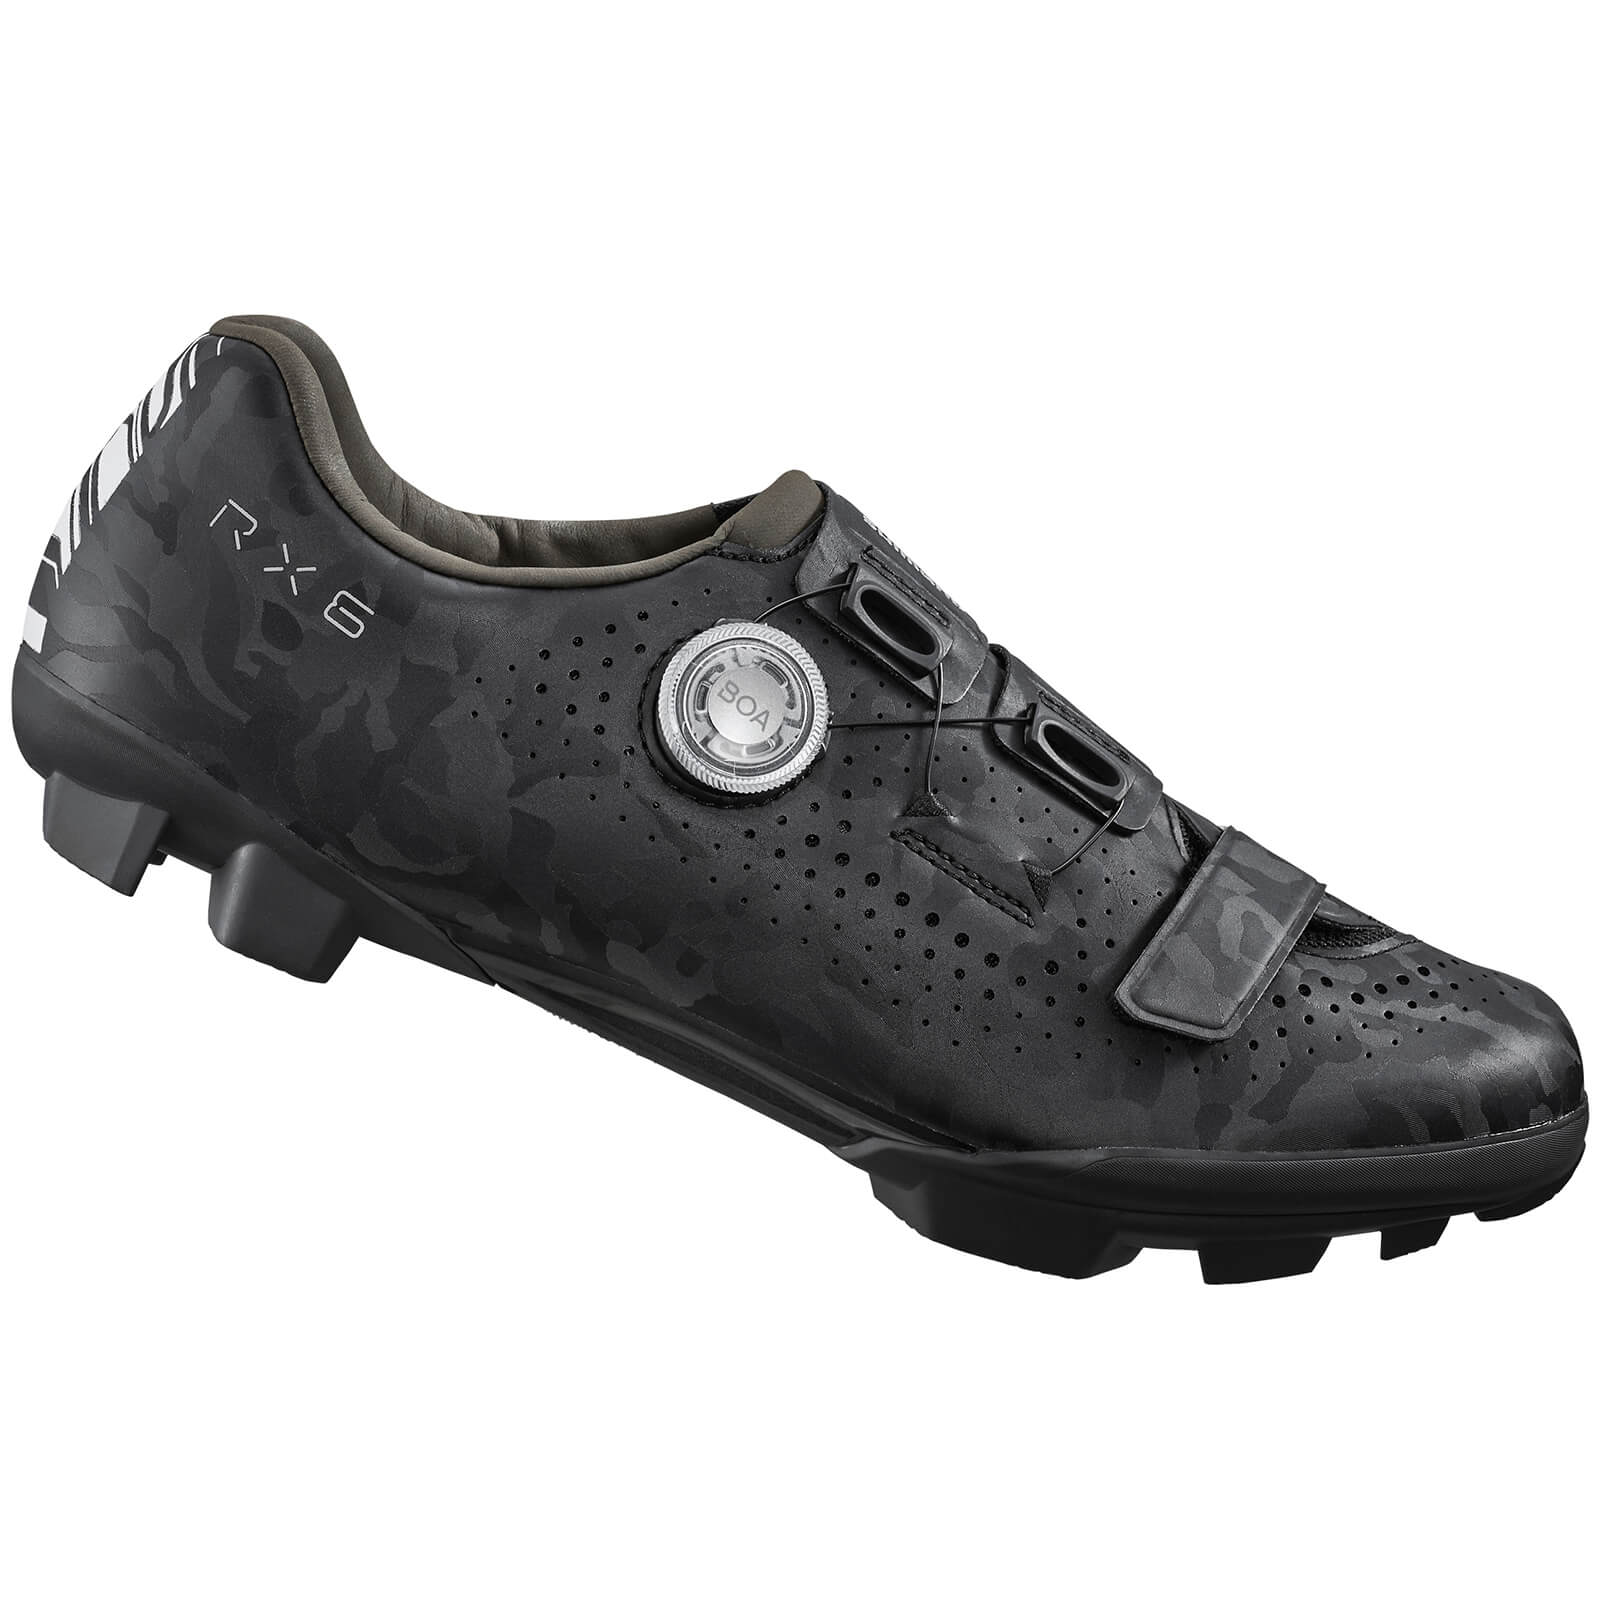 Shimano RX600 Gravel Cycling Shoes - 45 - Black